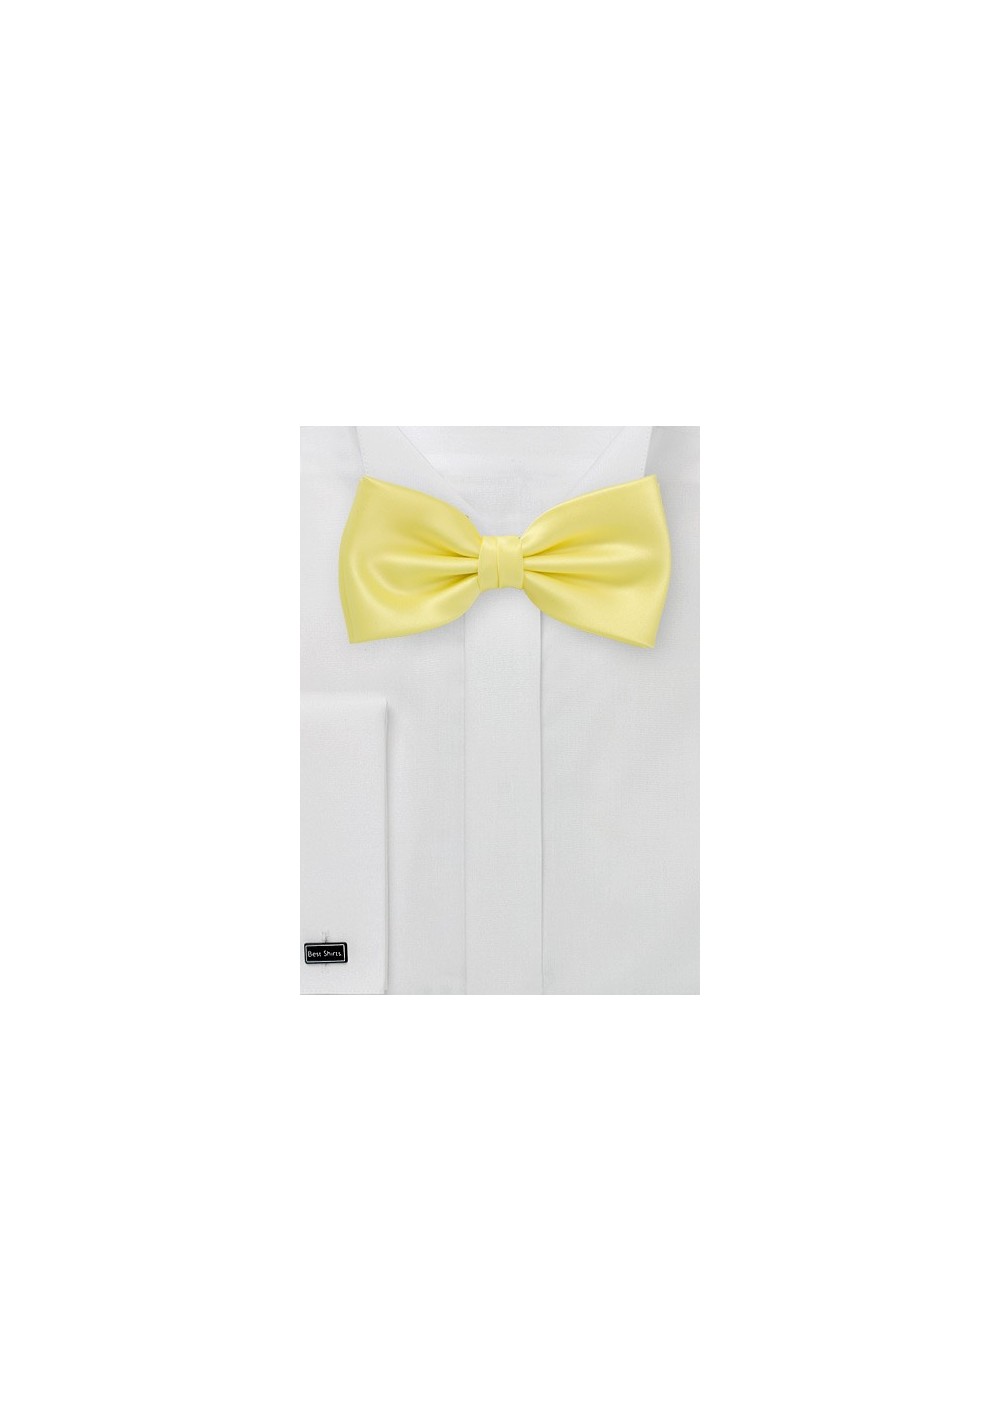 Light Pastel Yellow Bow Tie